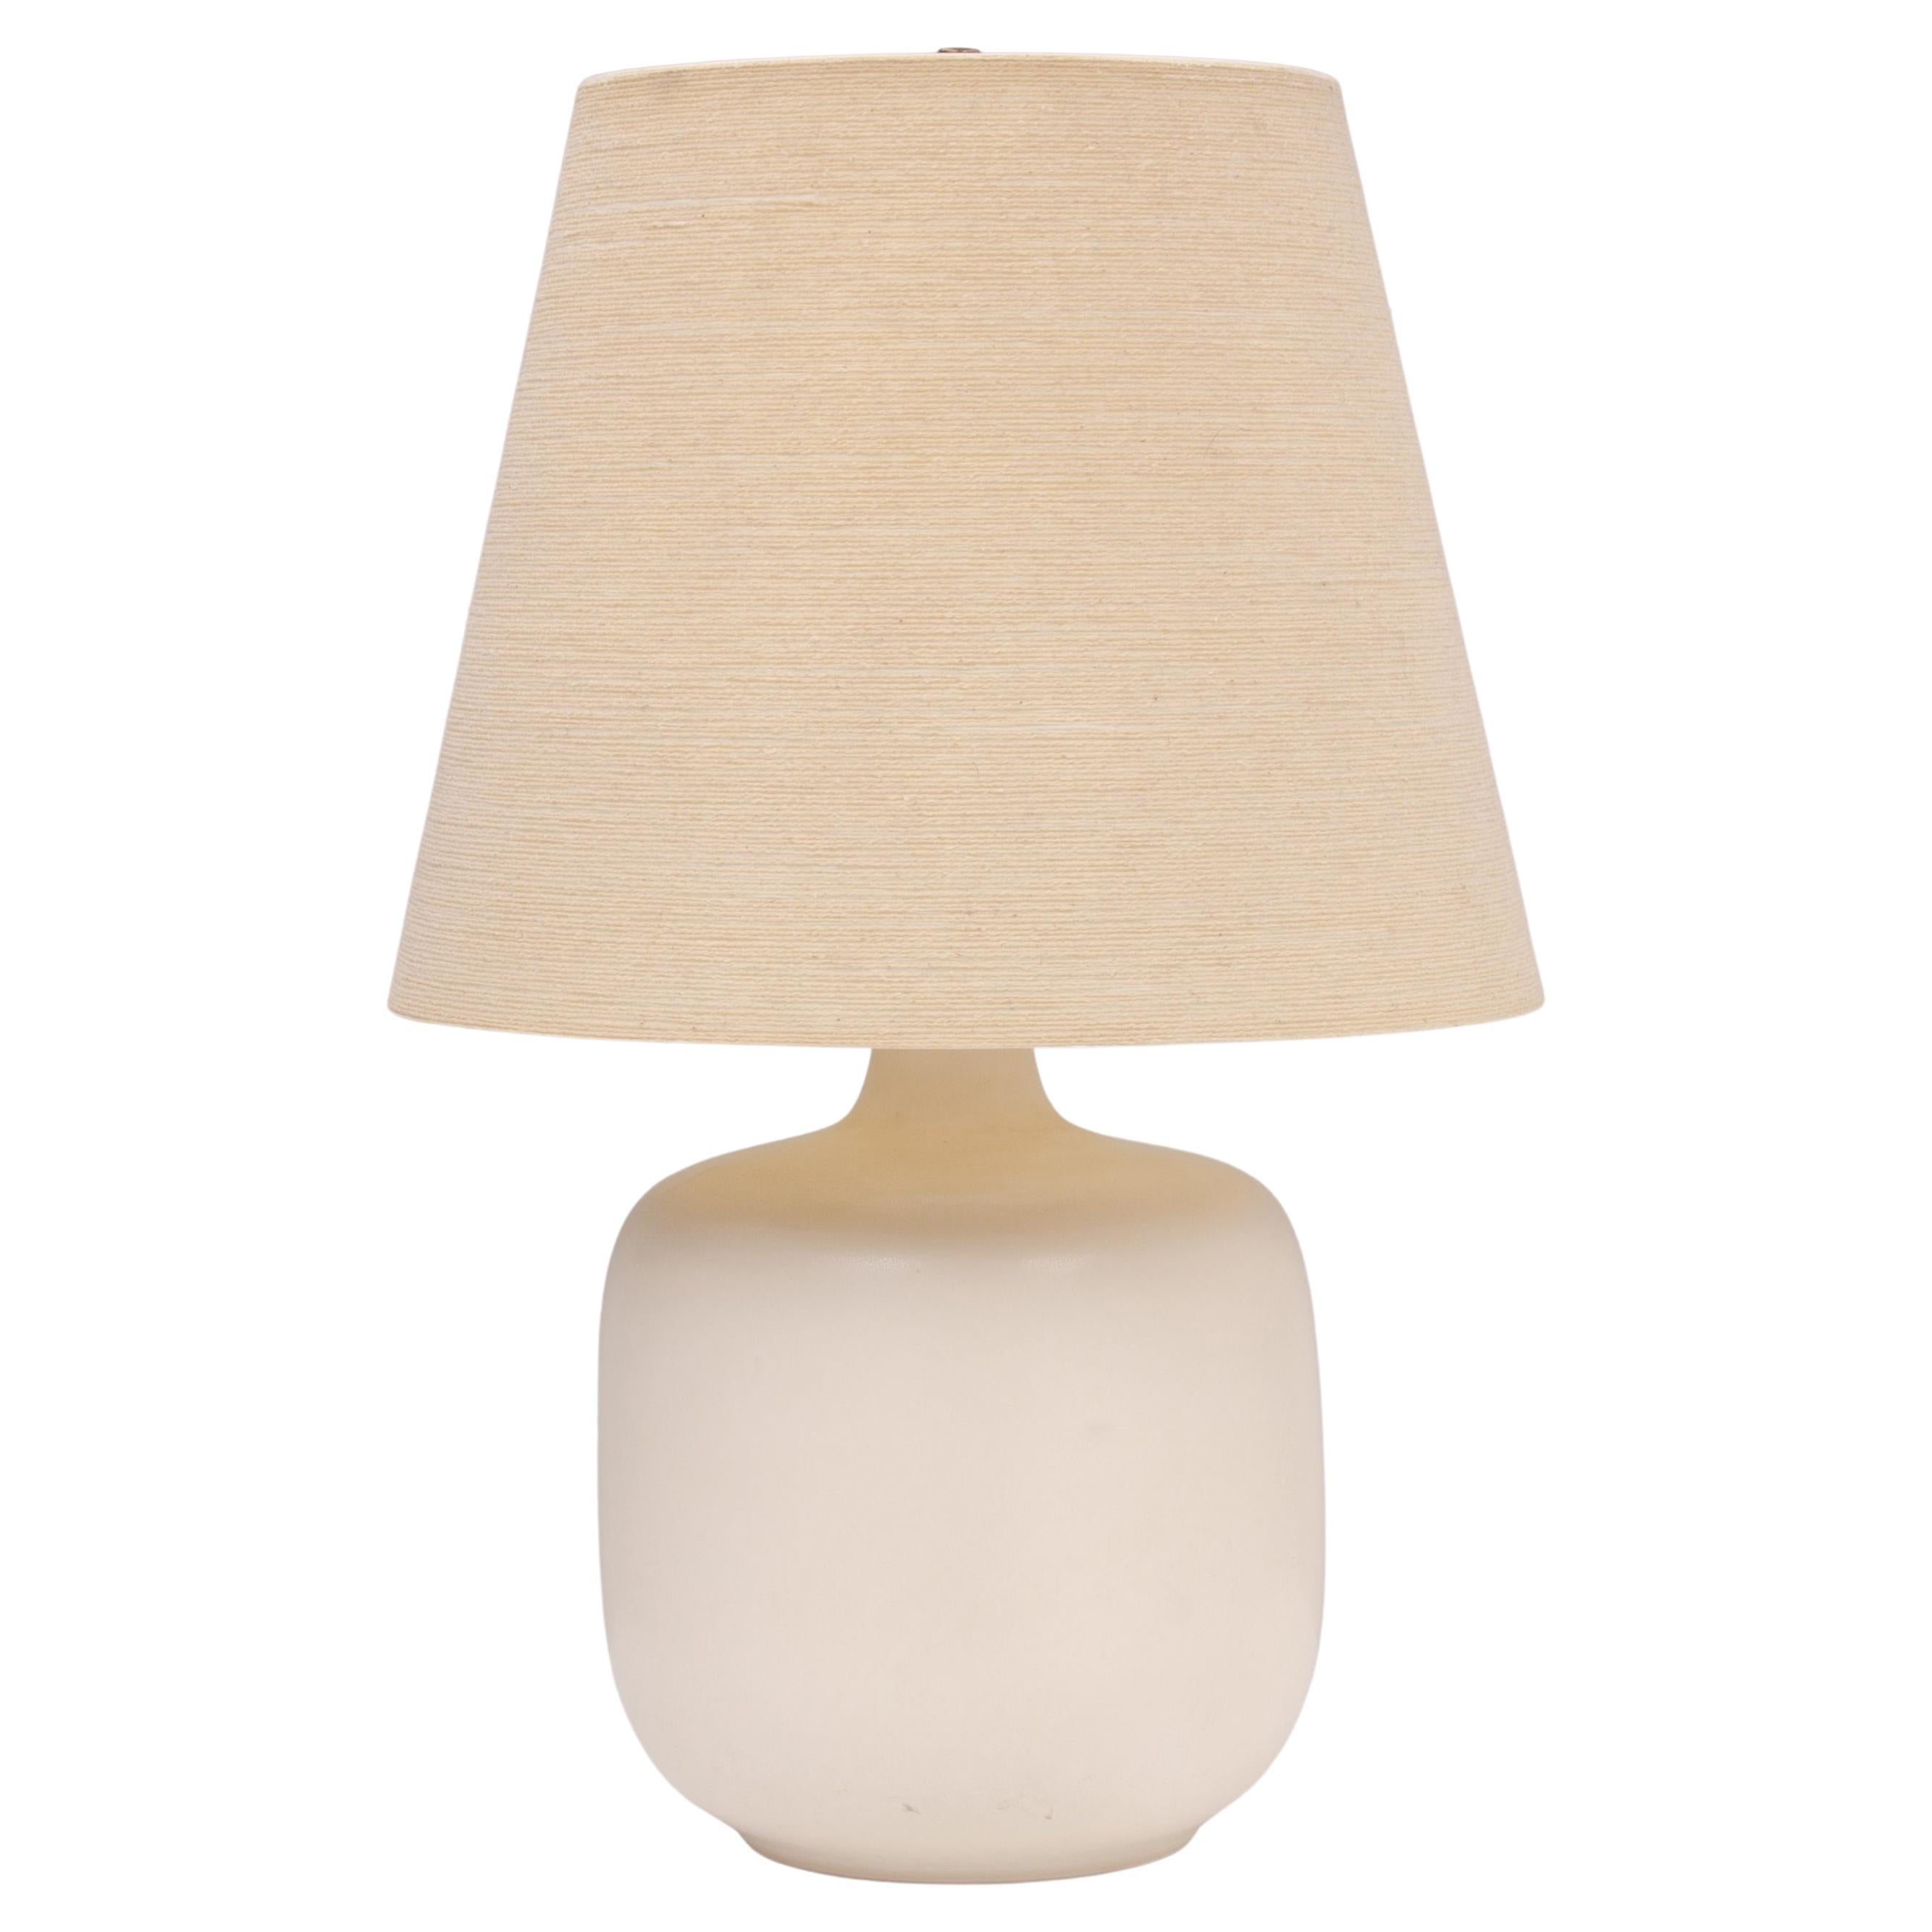 Large Lotte & Gunnar Bostlund Table Lamp Original Shade Unmarked Bone Stoneware For Sale